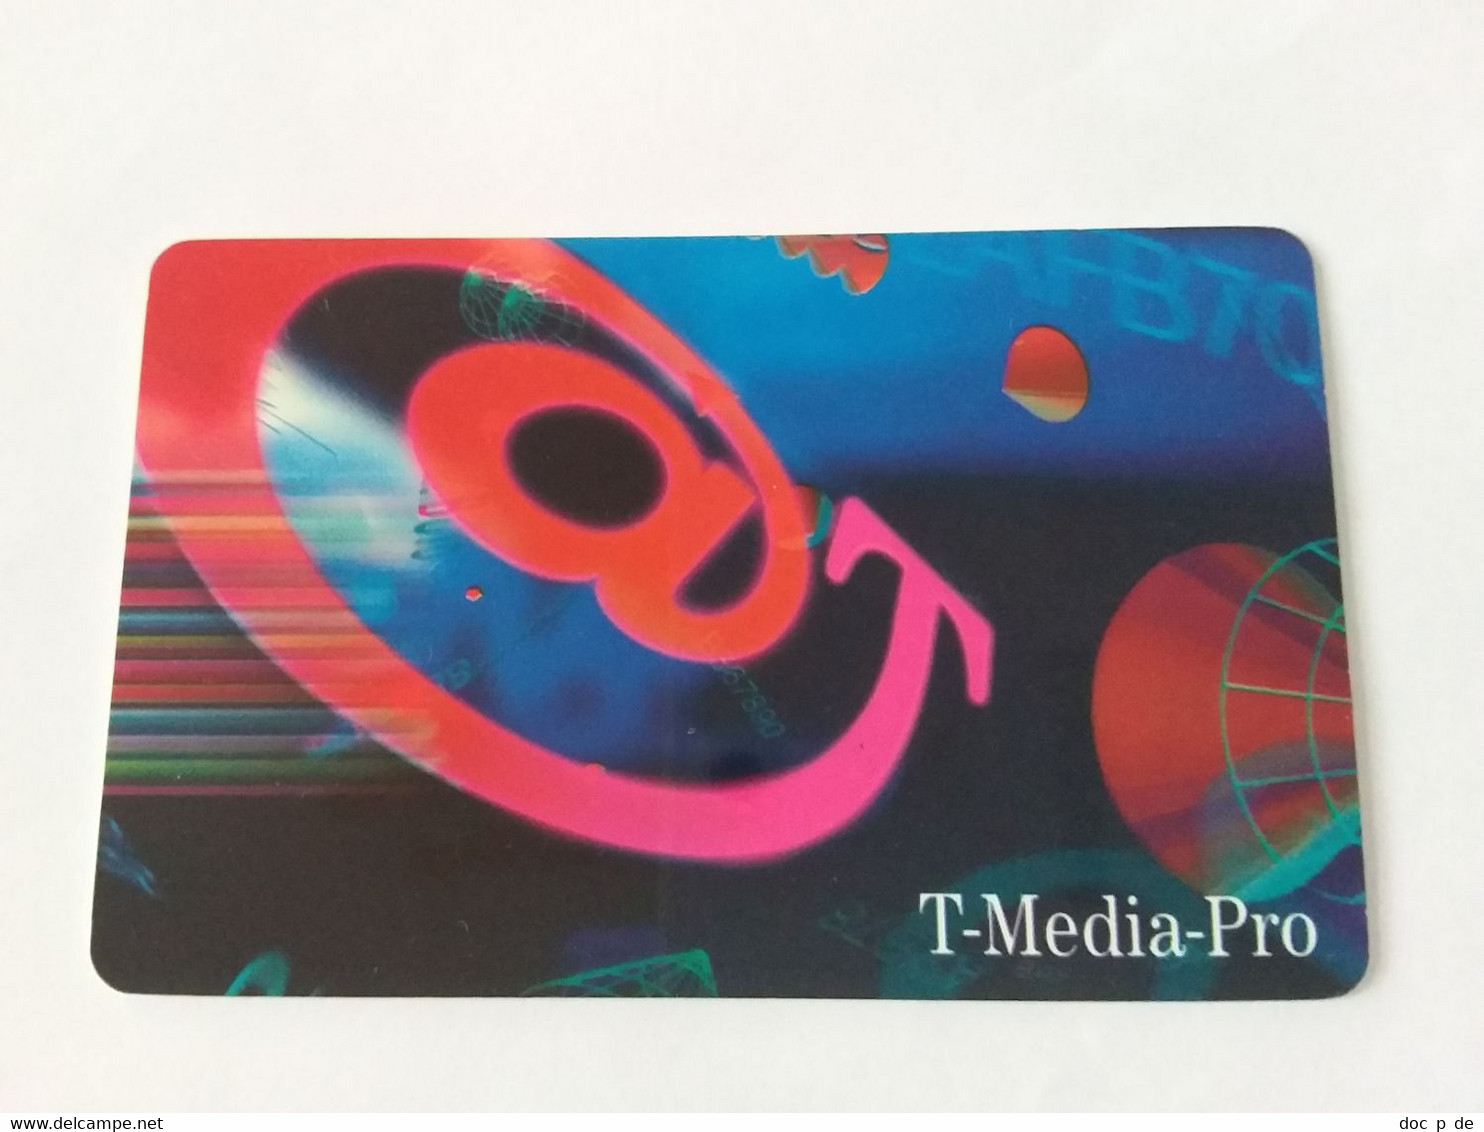 Germany  - A 15/97  T-Media-Pro @ - Mint - A + AD-Series : D. Telekom AG Advertisement